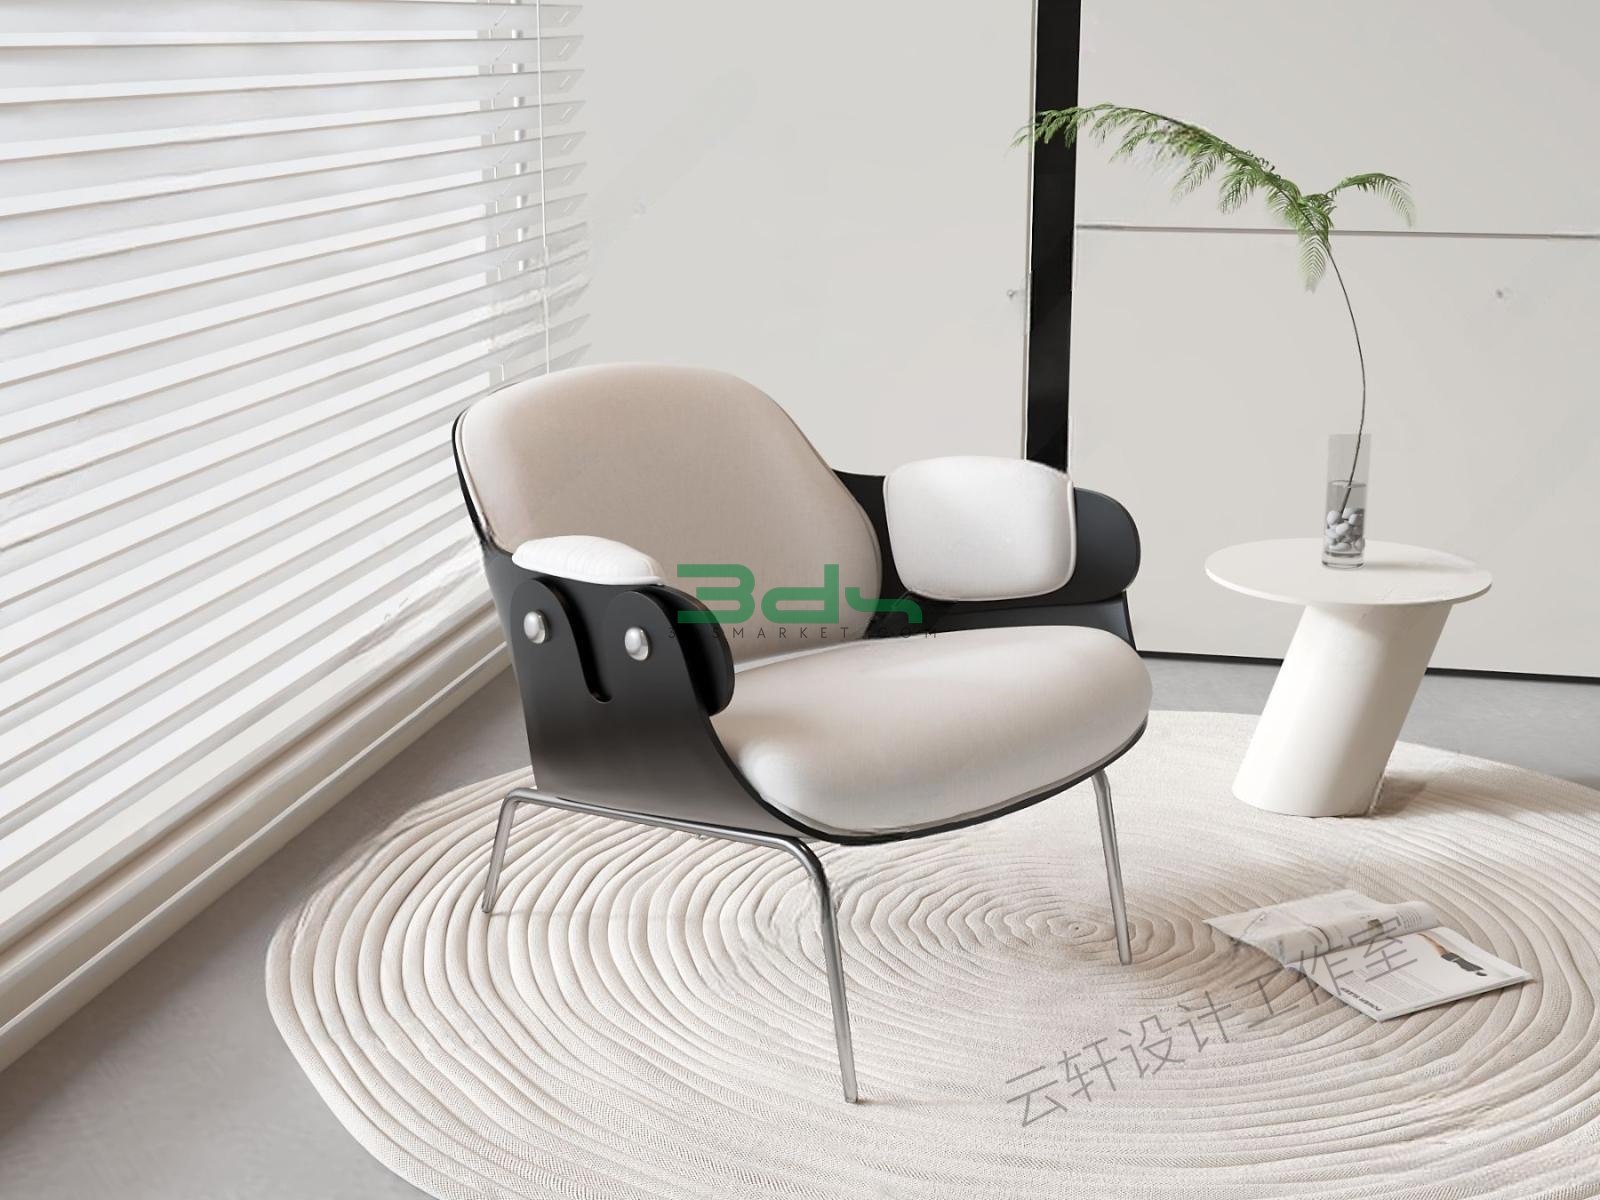 Free 3D chair model 138 - Free download 3d models 3dsmax, sketchup ...